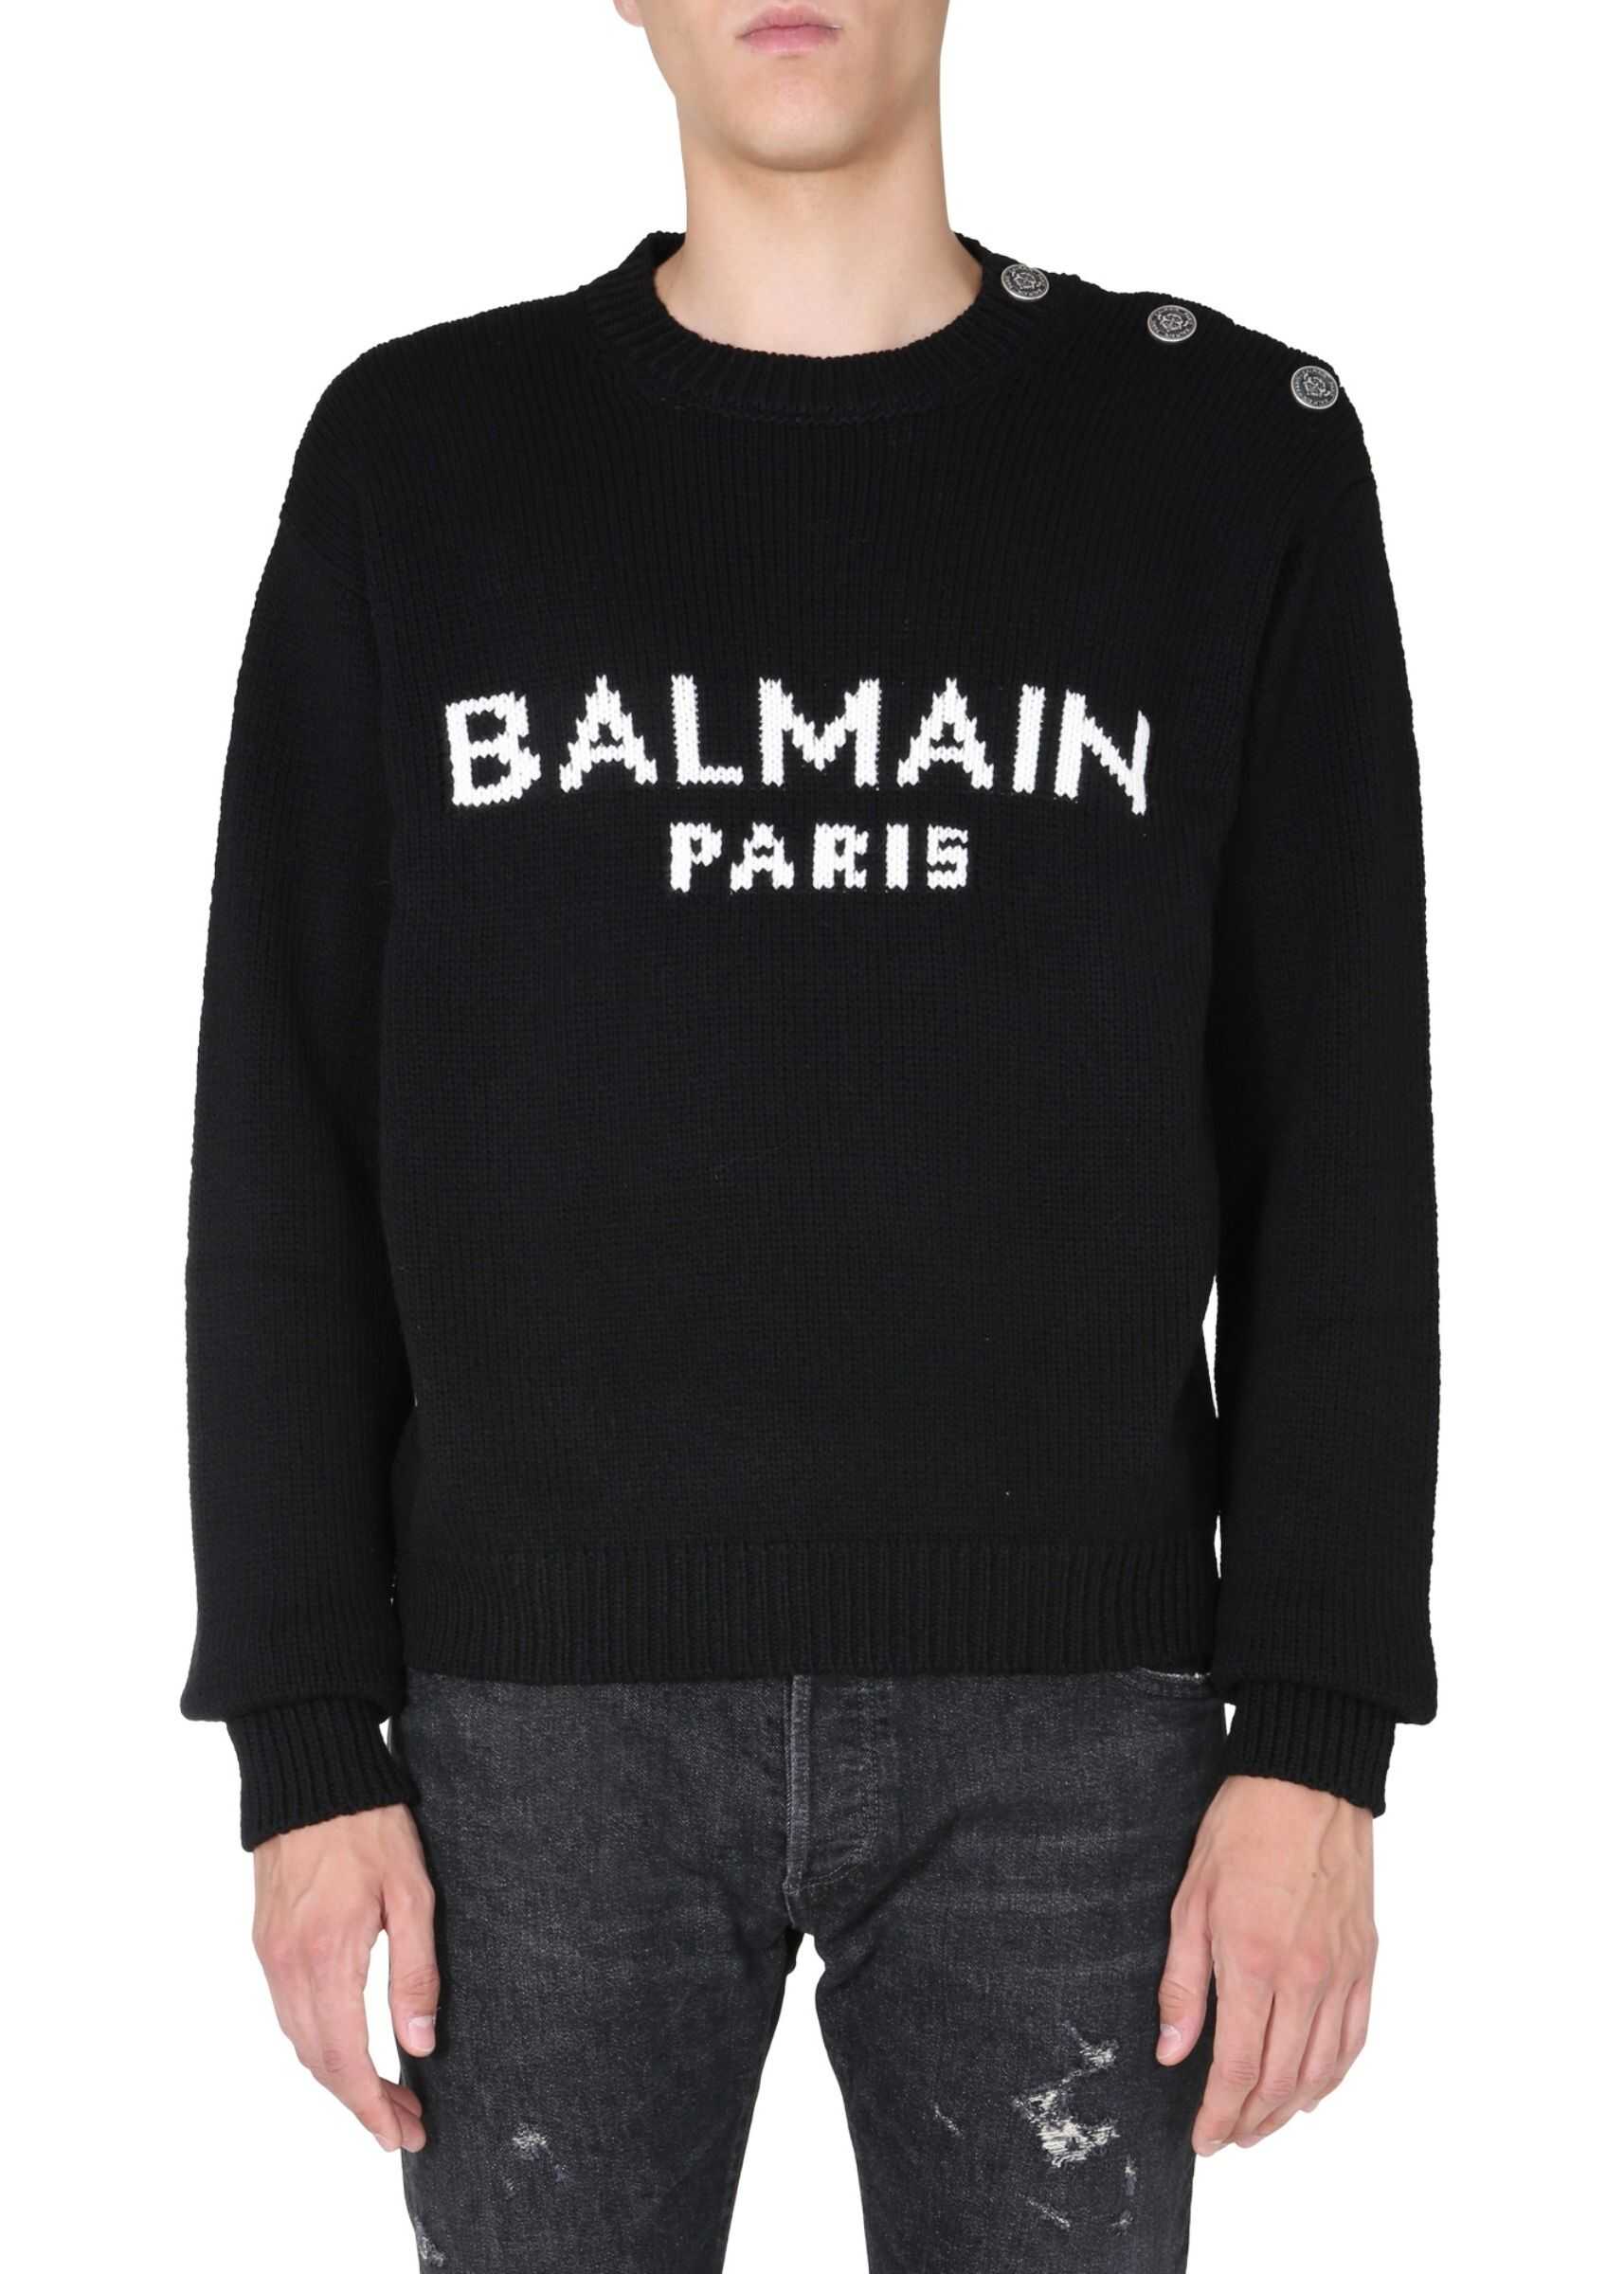 Balmain Crew Neck Sweater BLACK